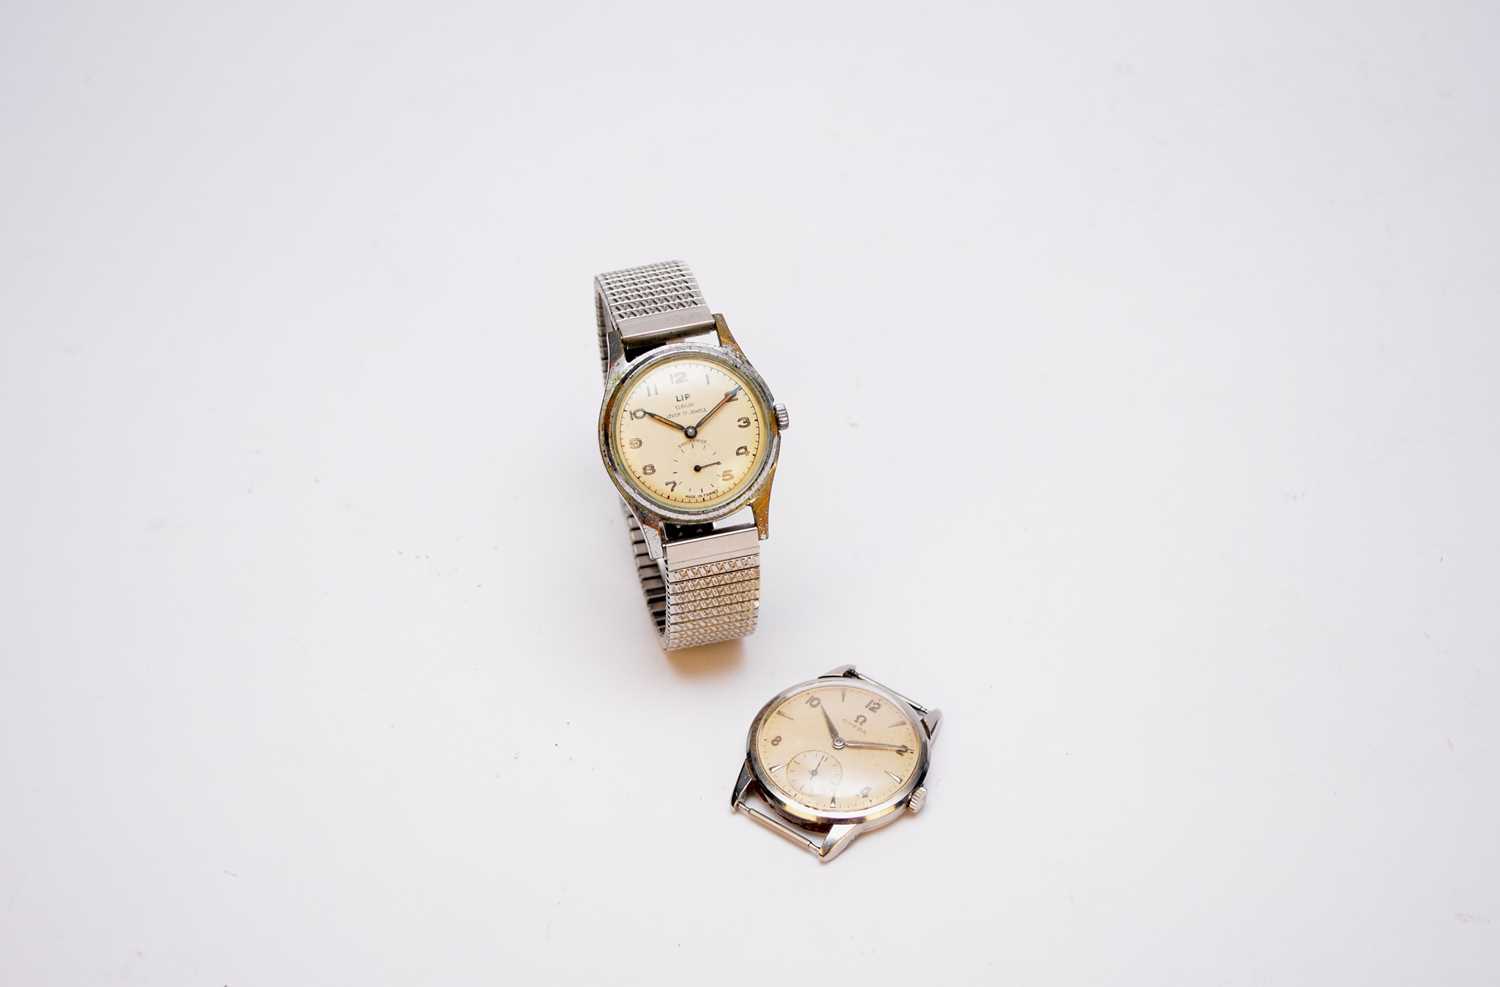 An Omega gentleman's stainless steel wristwatch and an LIP wristwatch